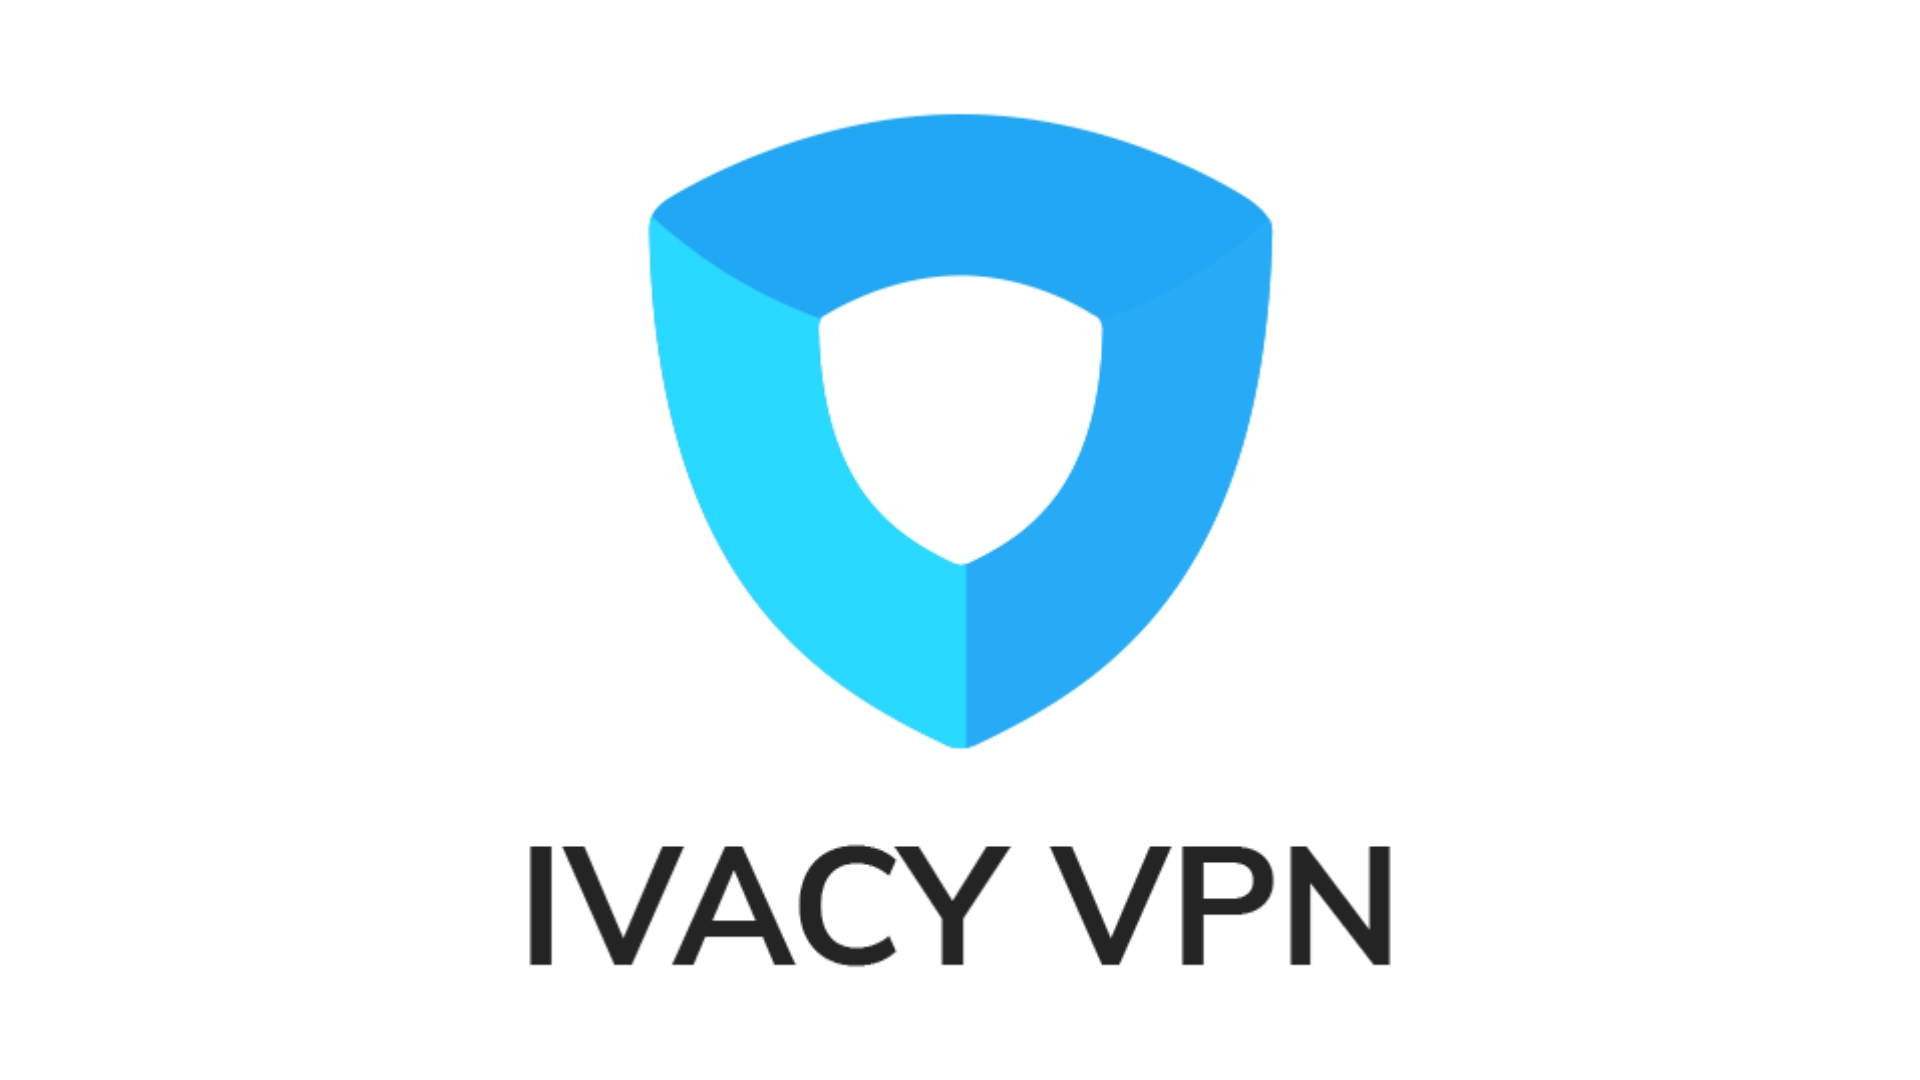 Best US VPN: Ivacy VPN. Image shows the company logo.